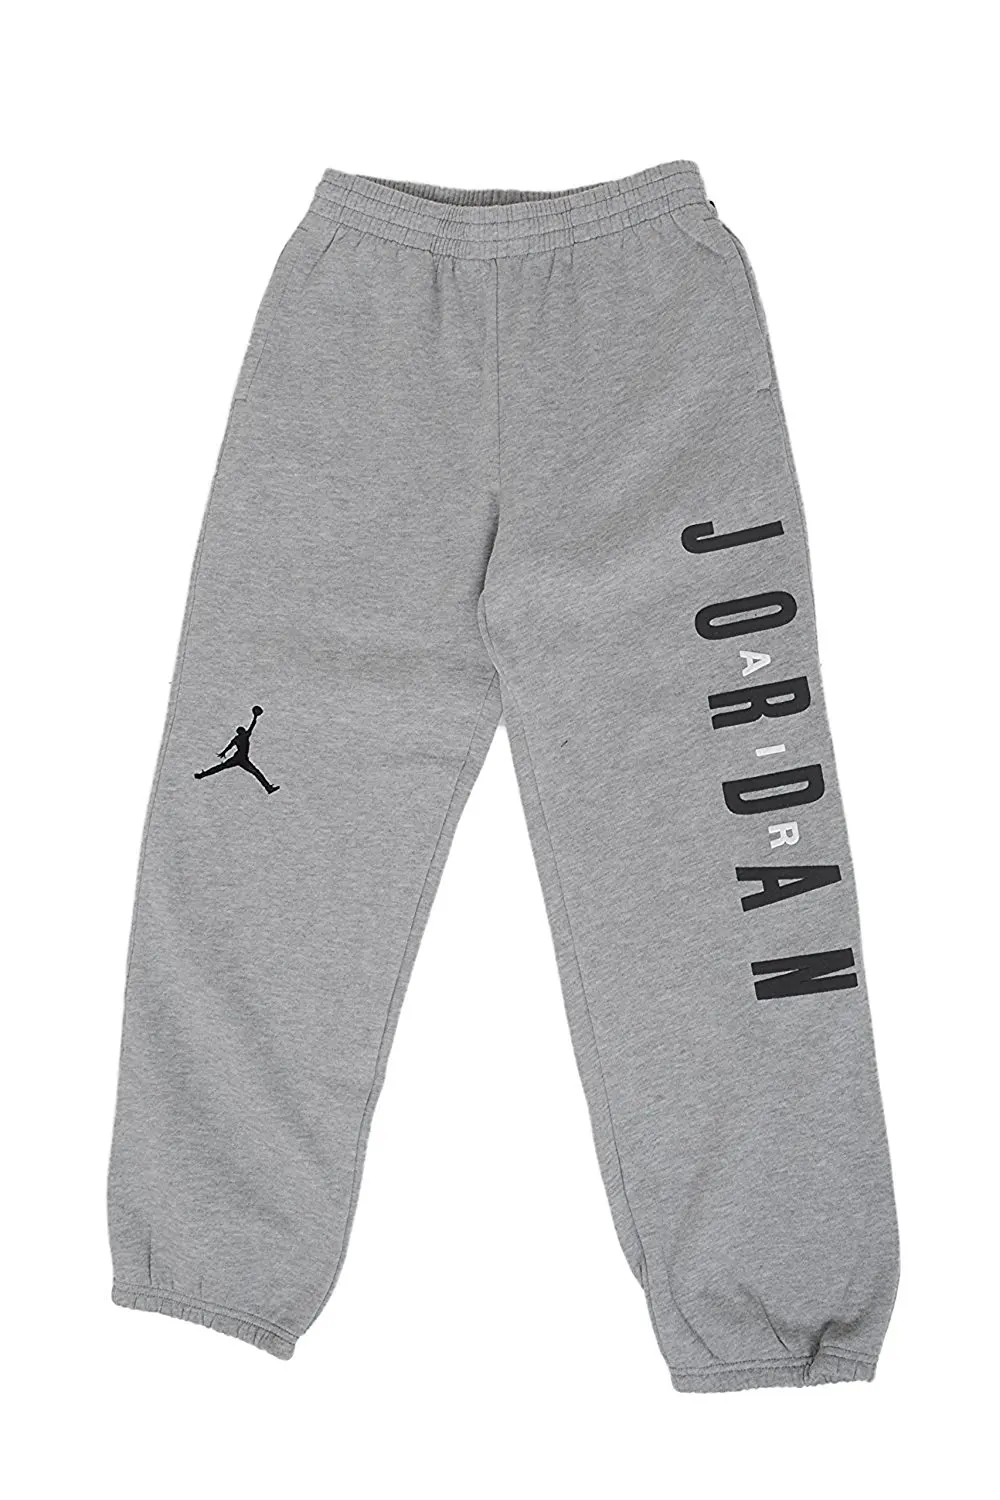 jordan grey pants